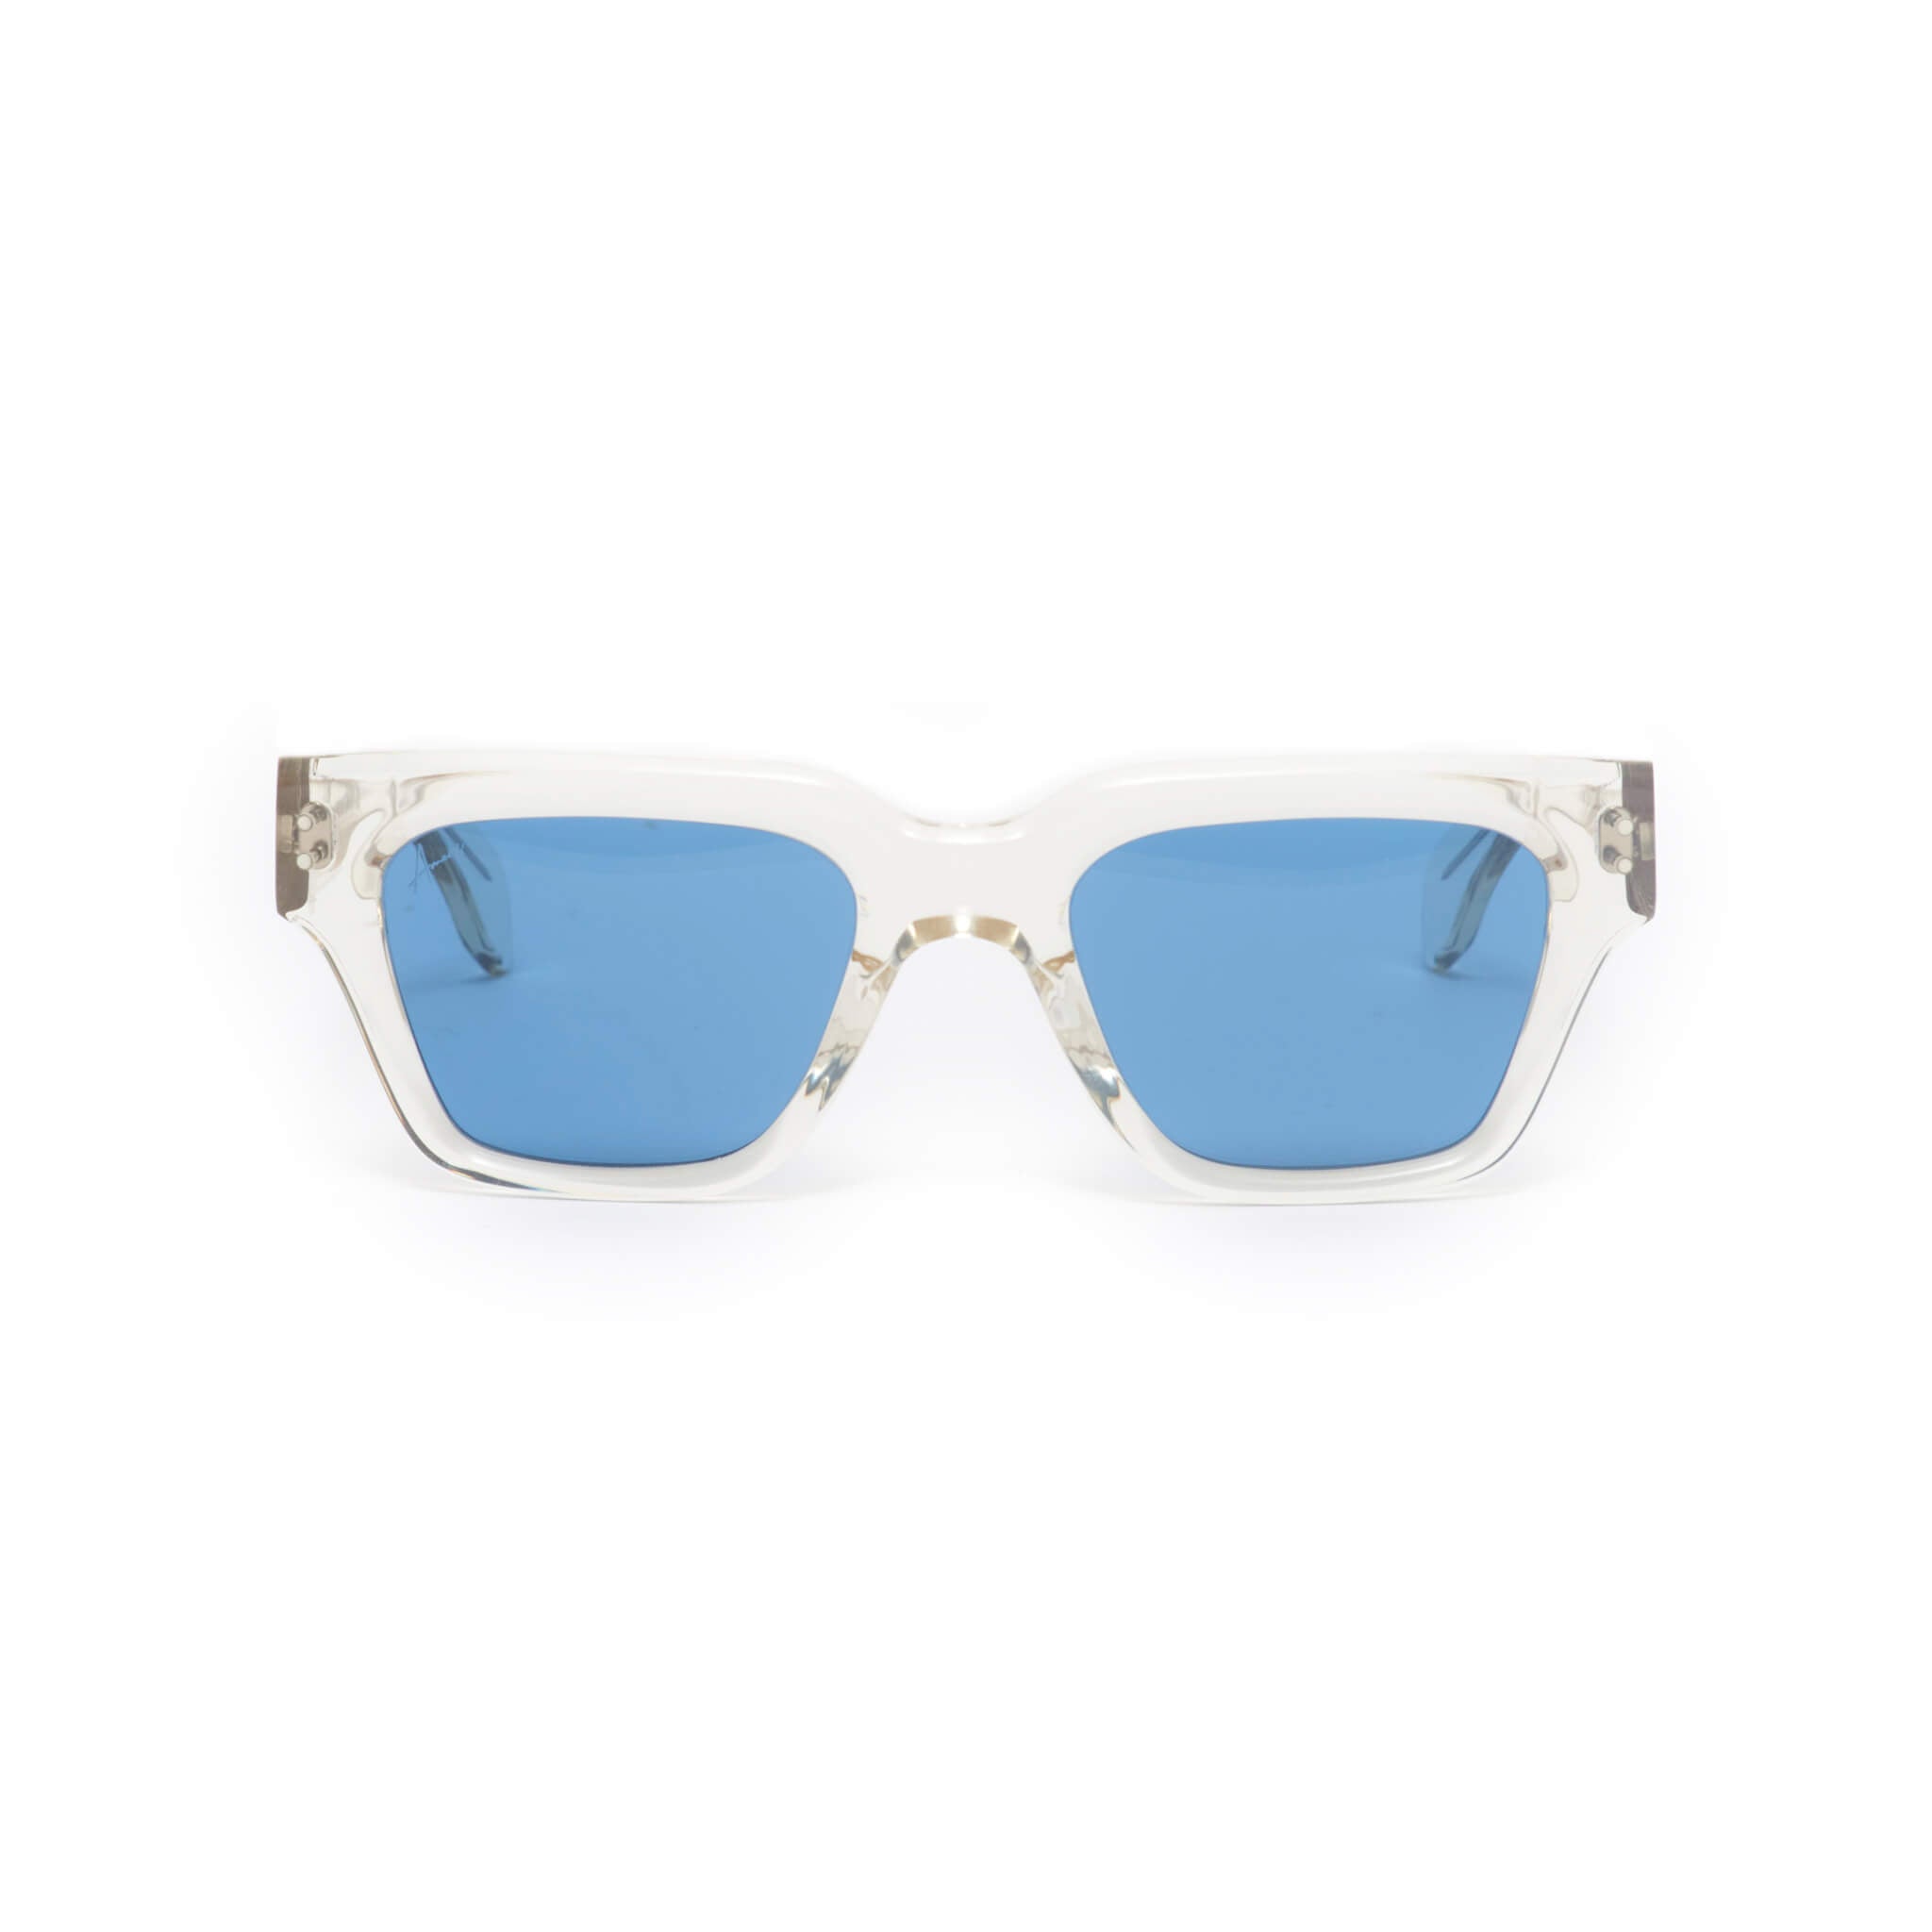 Transparent frames sunglasses with blue lenses